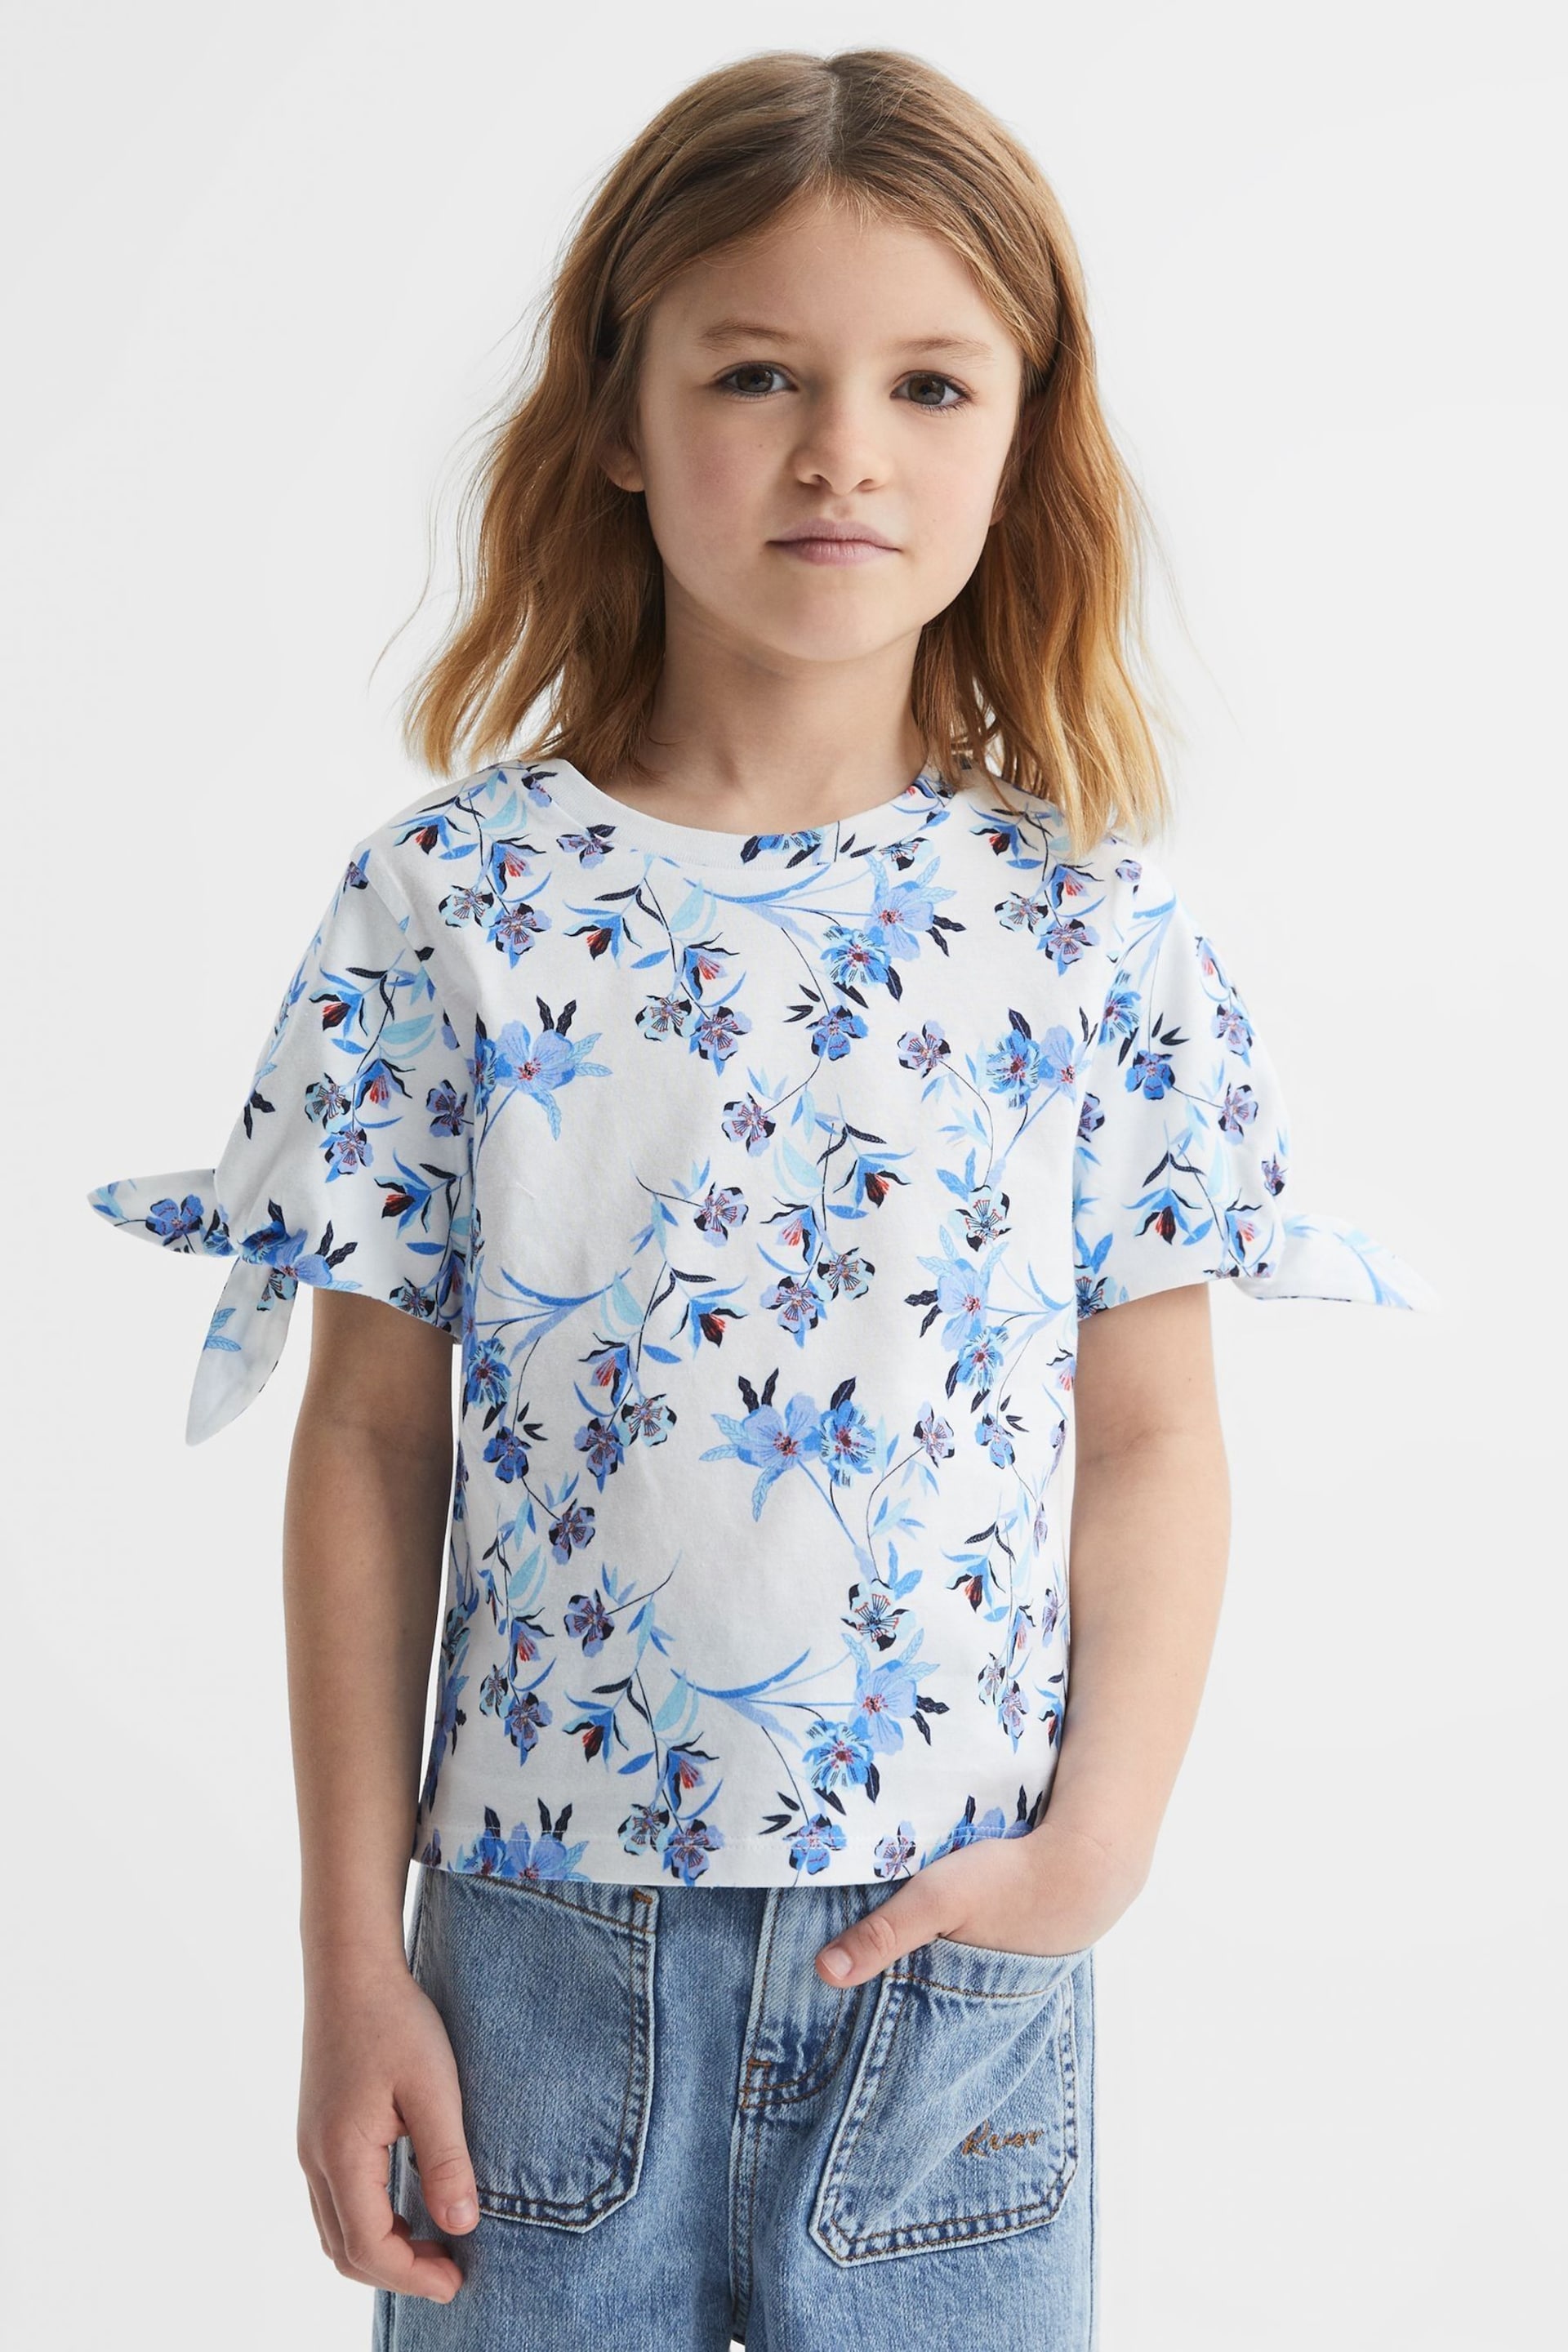 Reiss Blue Tally Senior Printed Cotton T-Shirt - Image 3 of 7